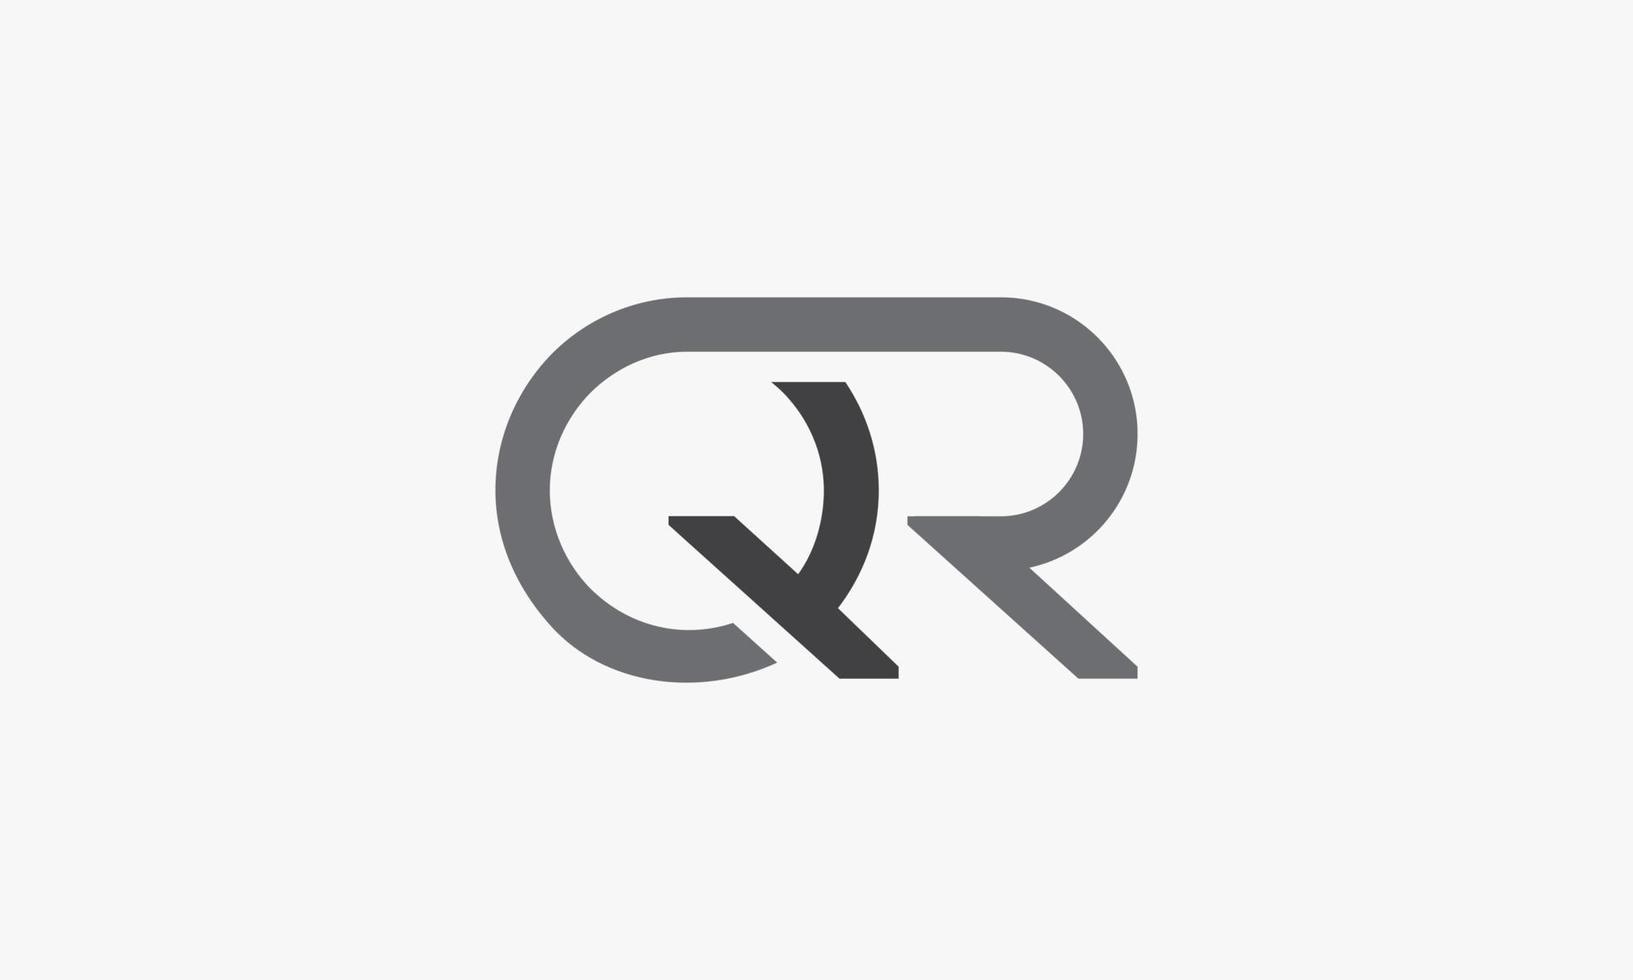 letter QR logo isolated on white background. vector